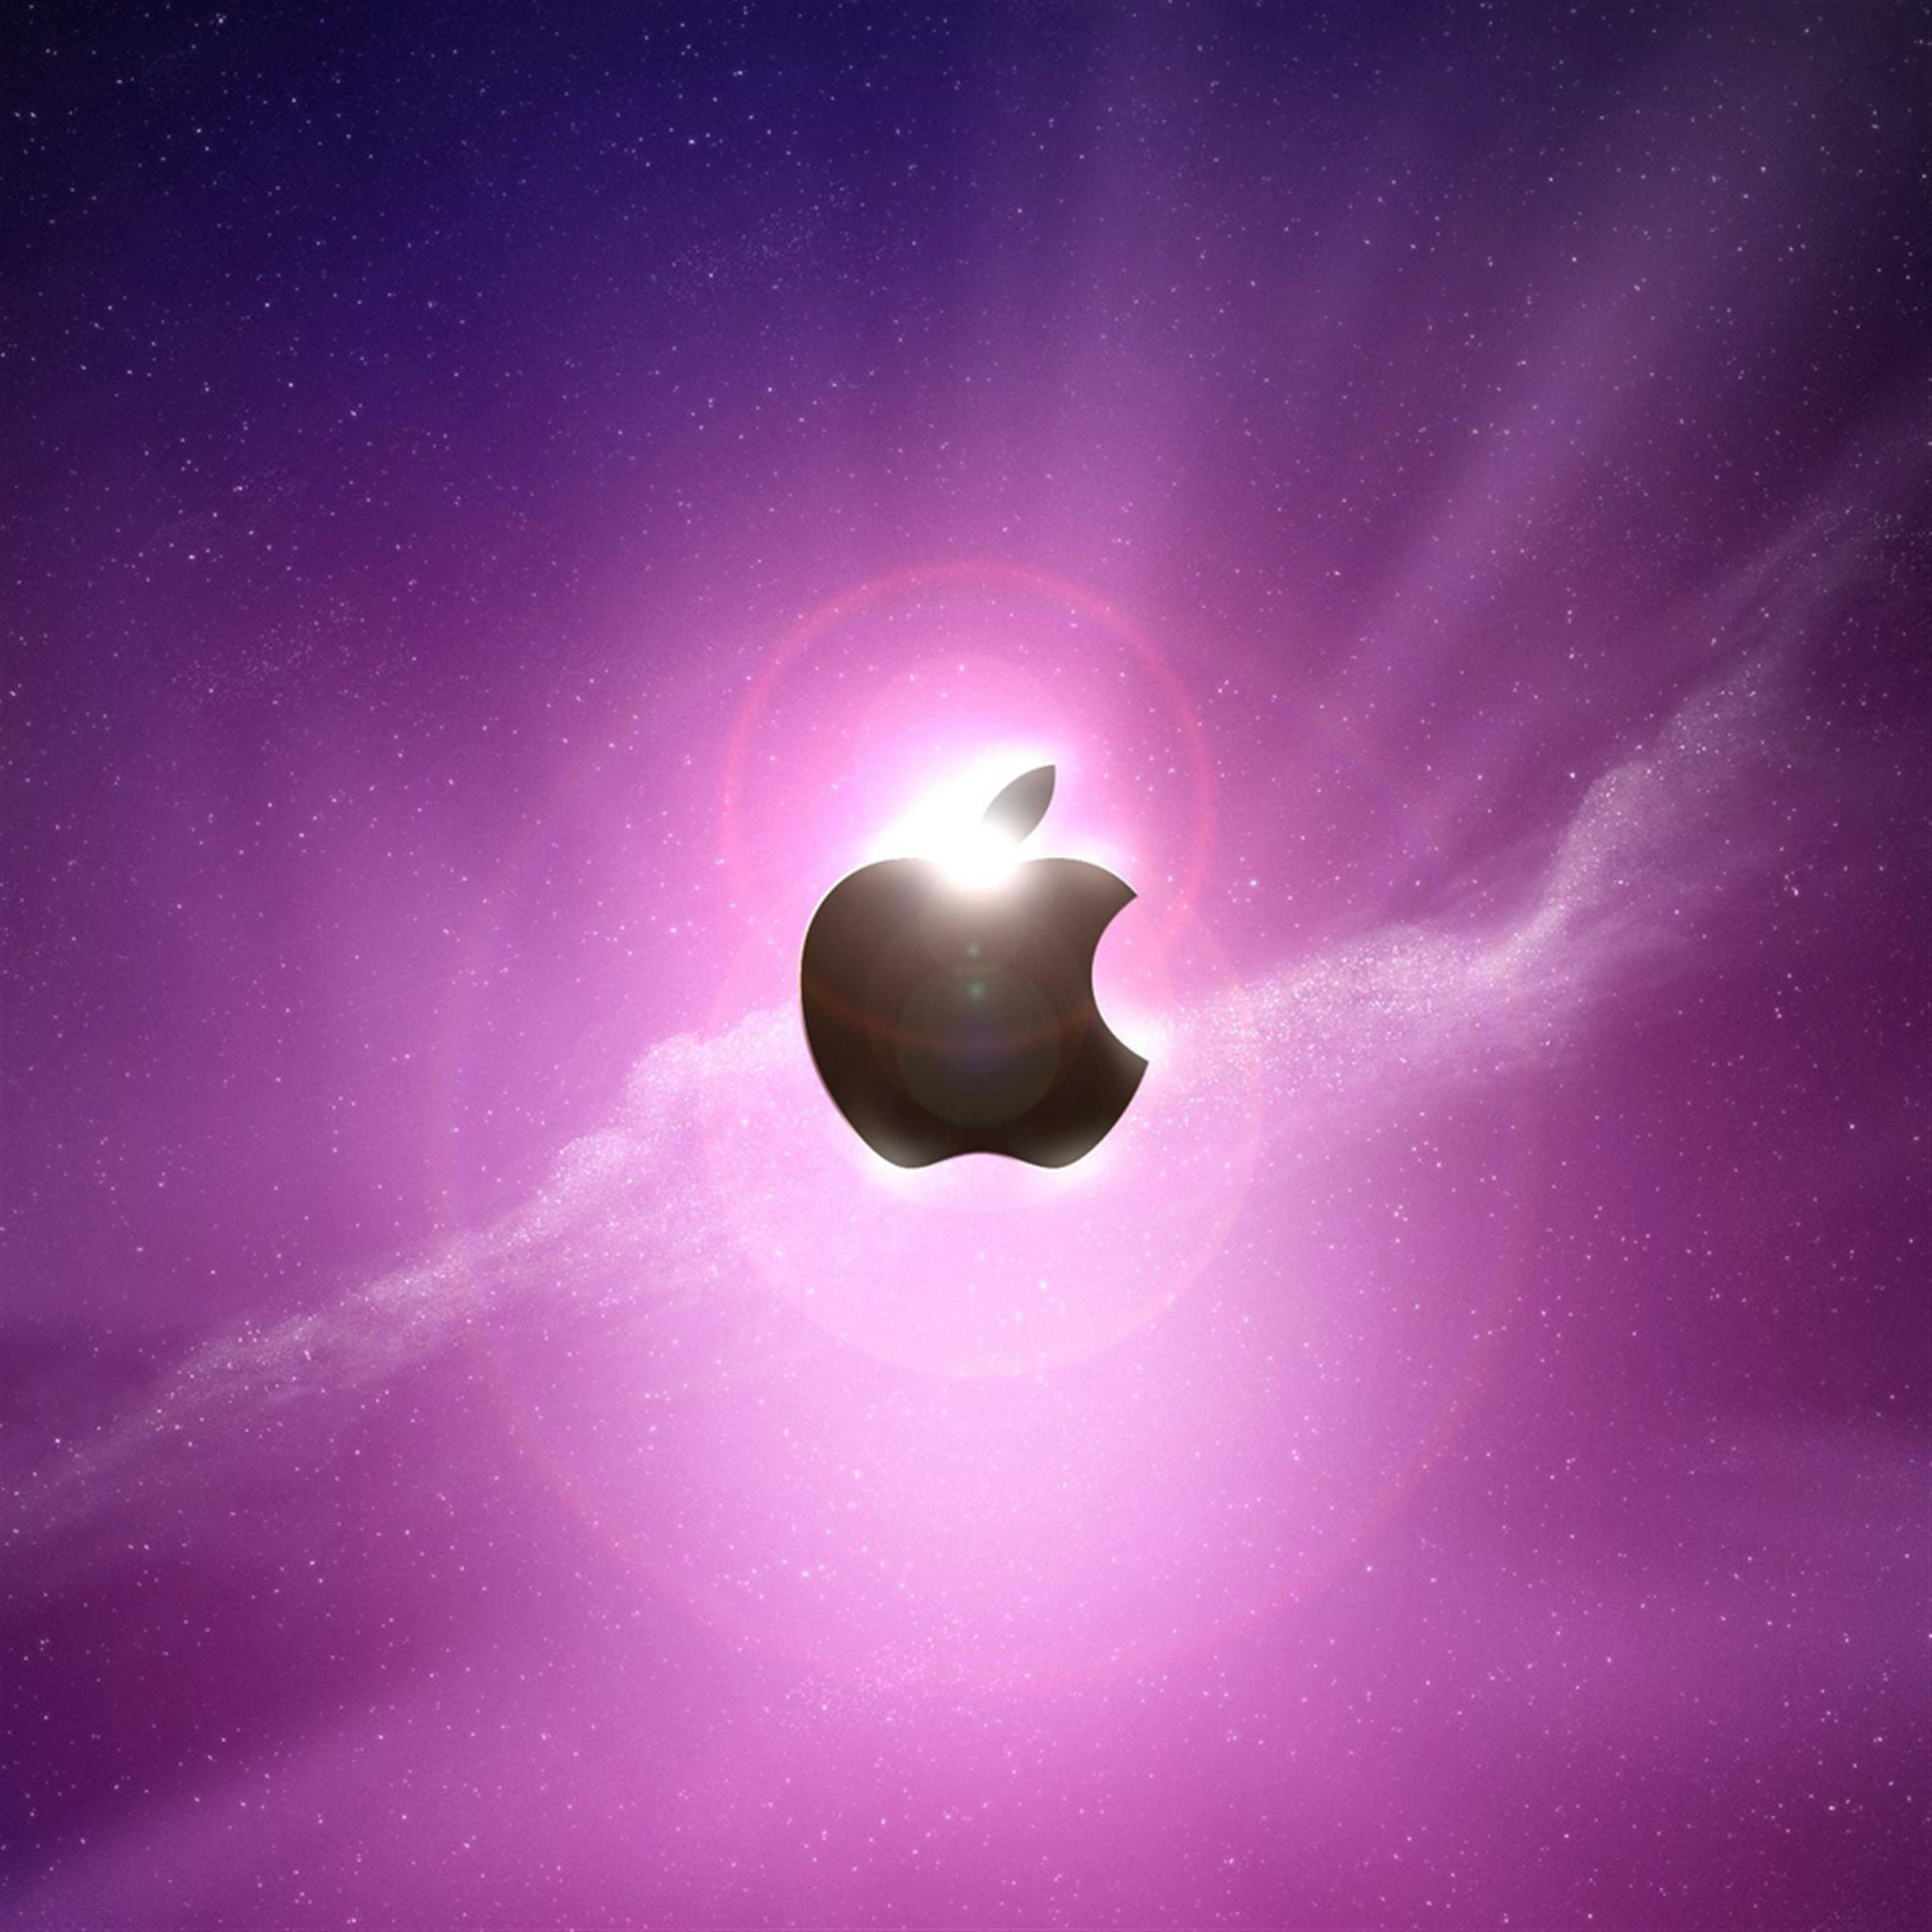 Apple Ipad Backgrounds Free Download Pixelstalk Net